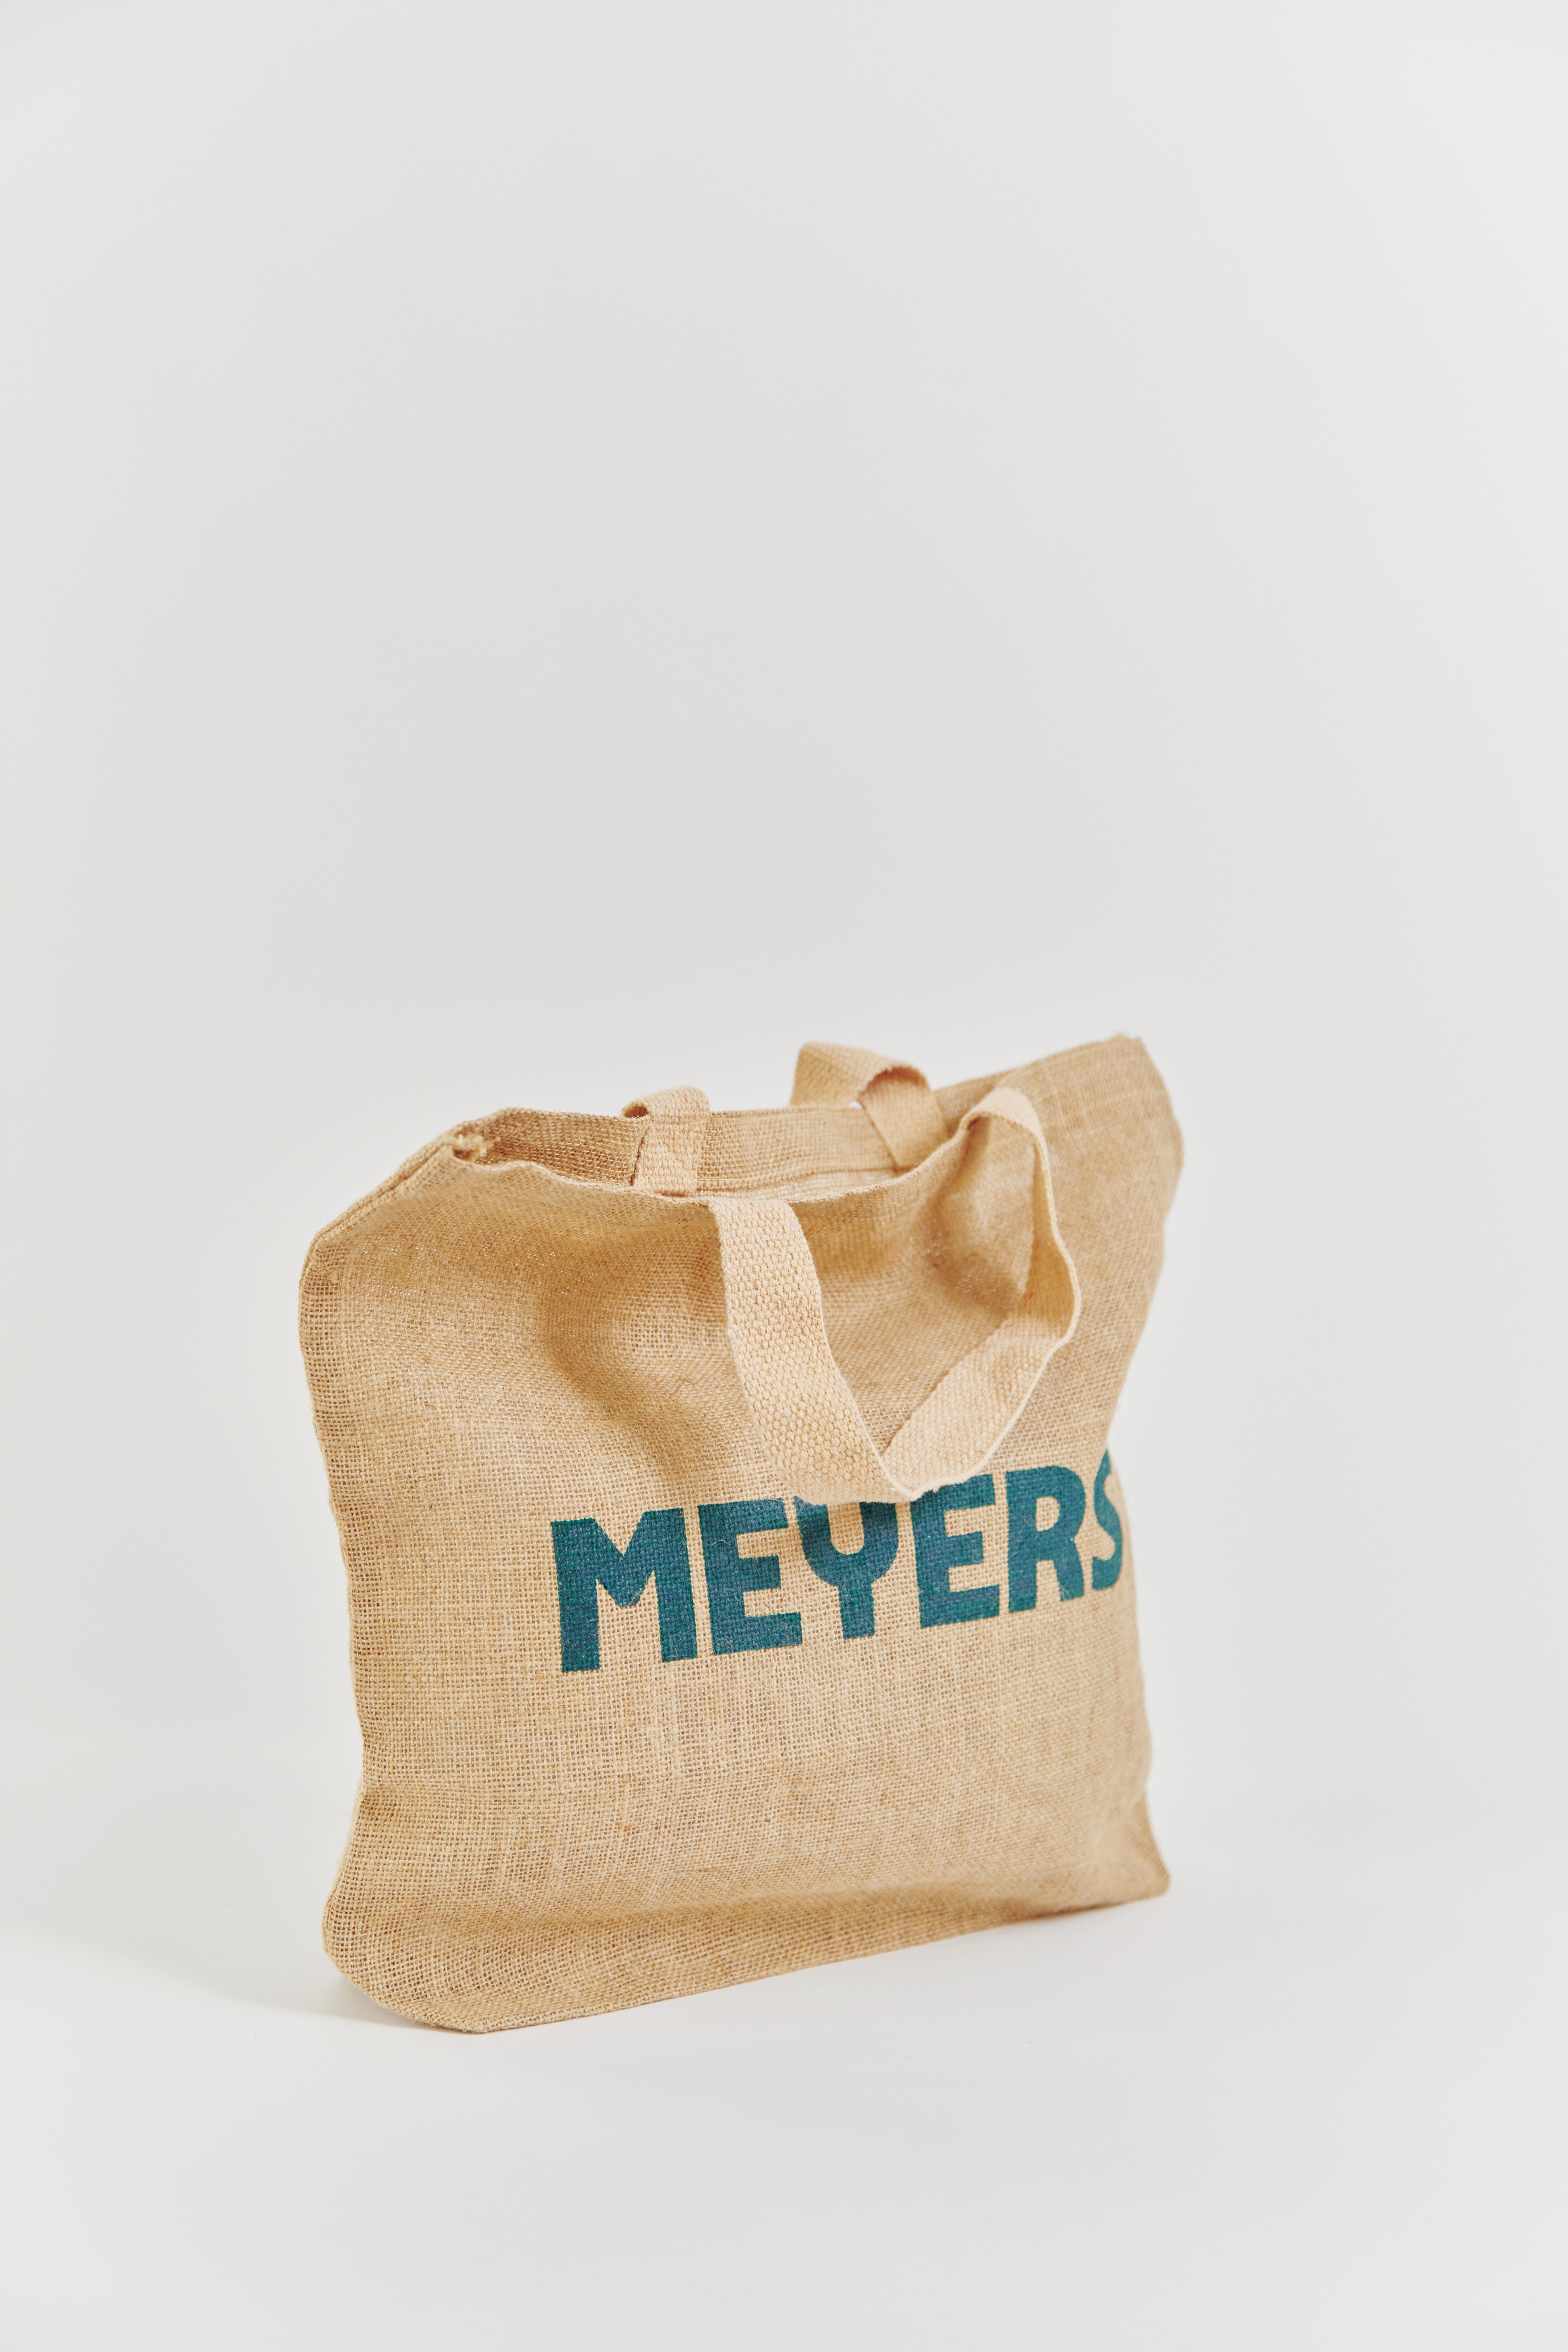 Meyers Jute bag